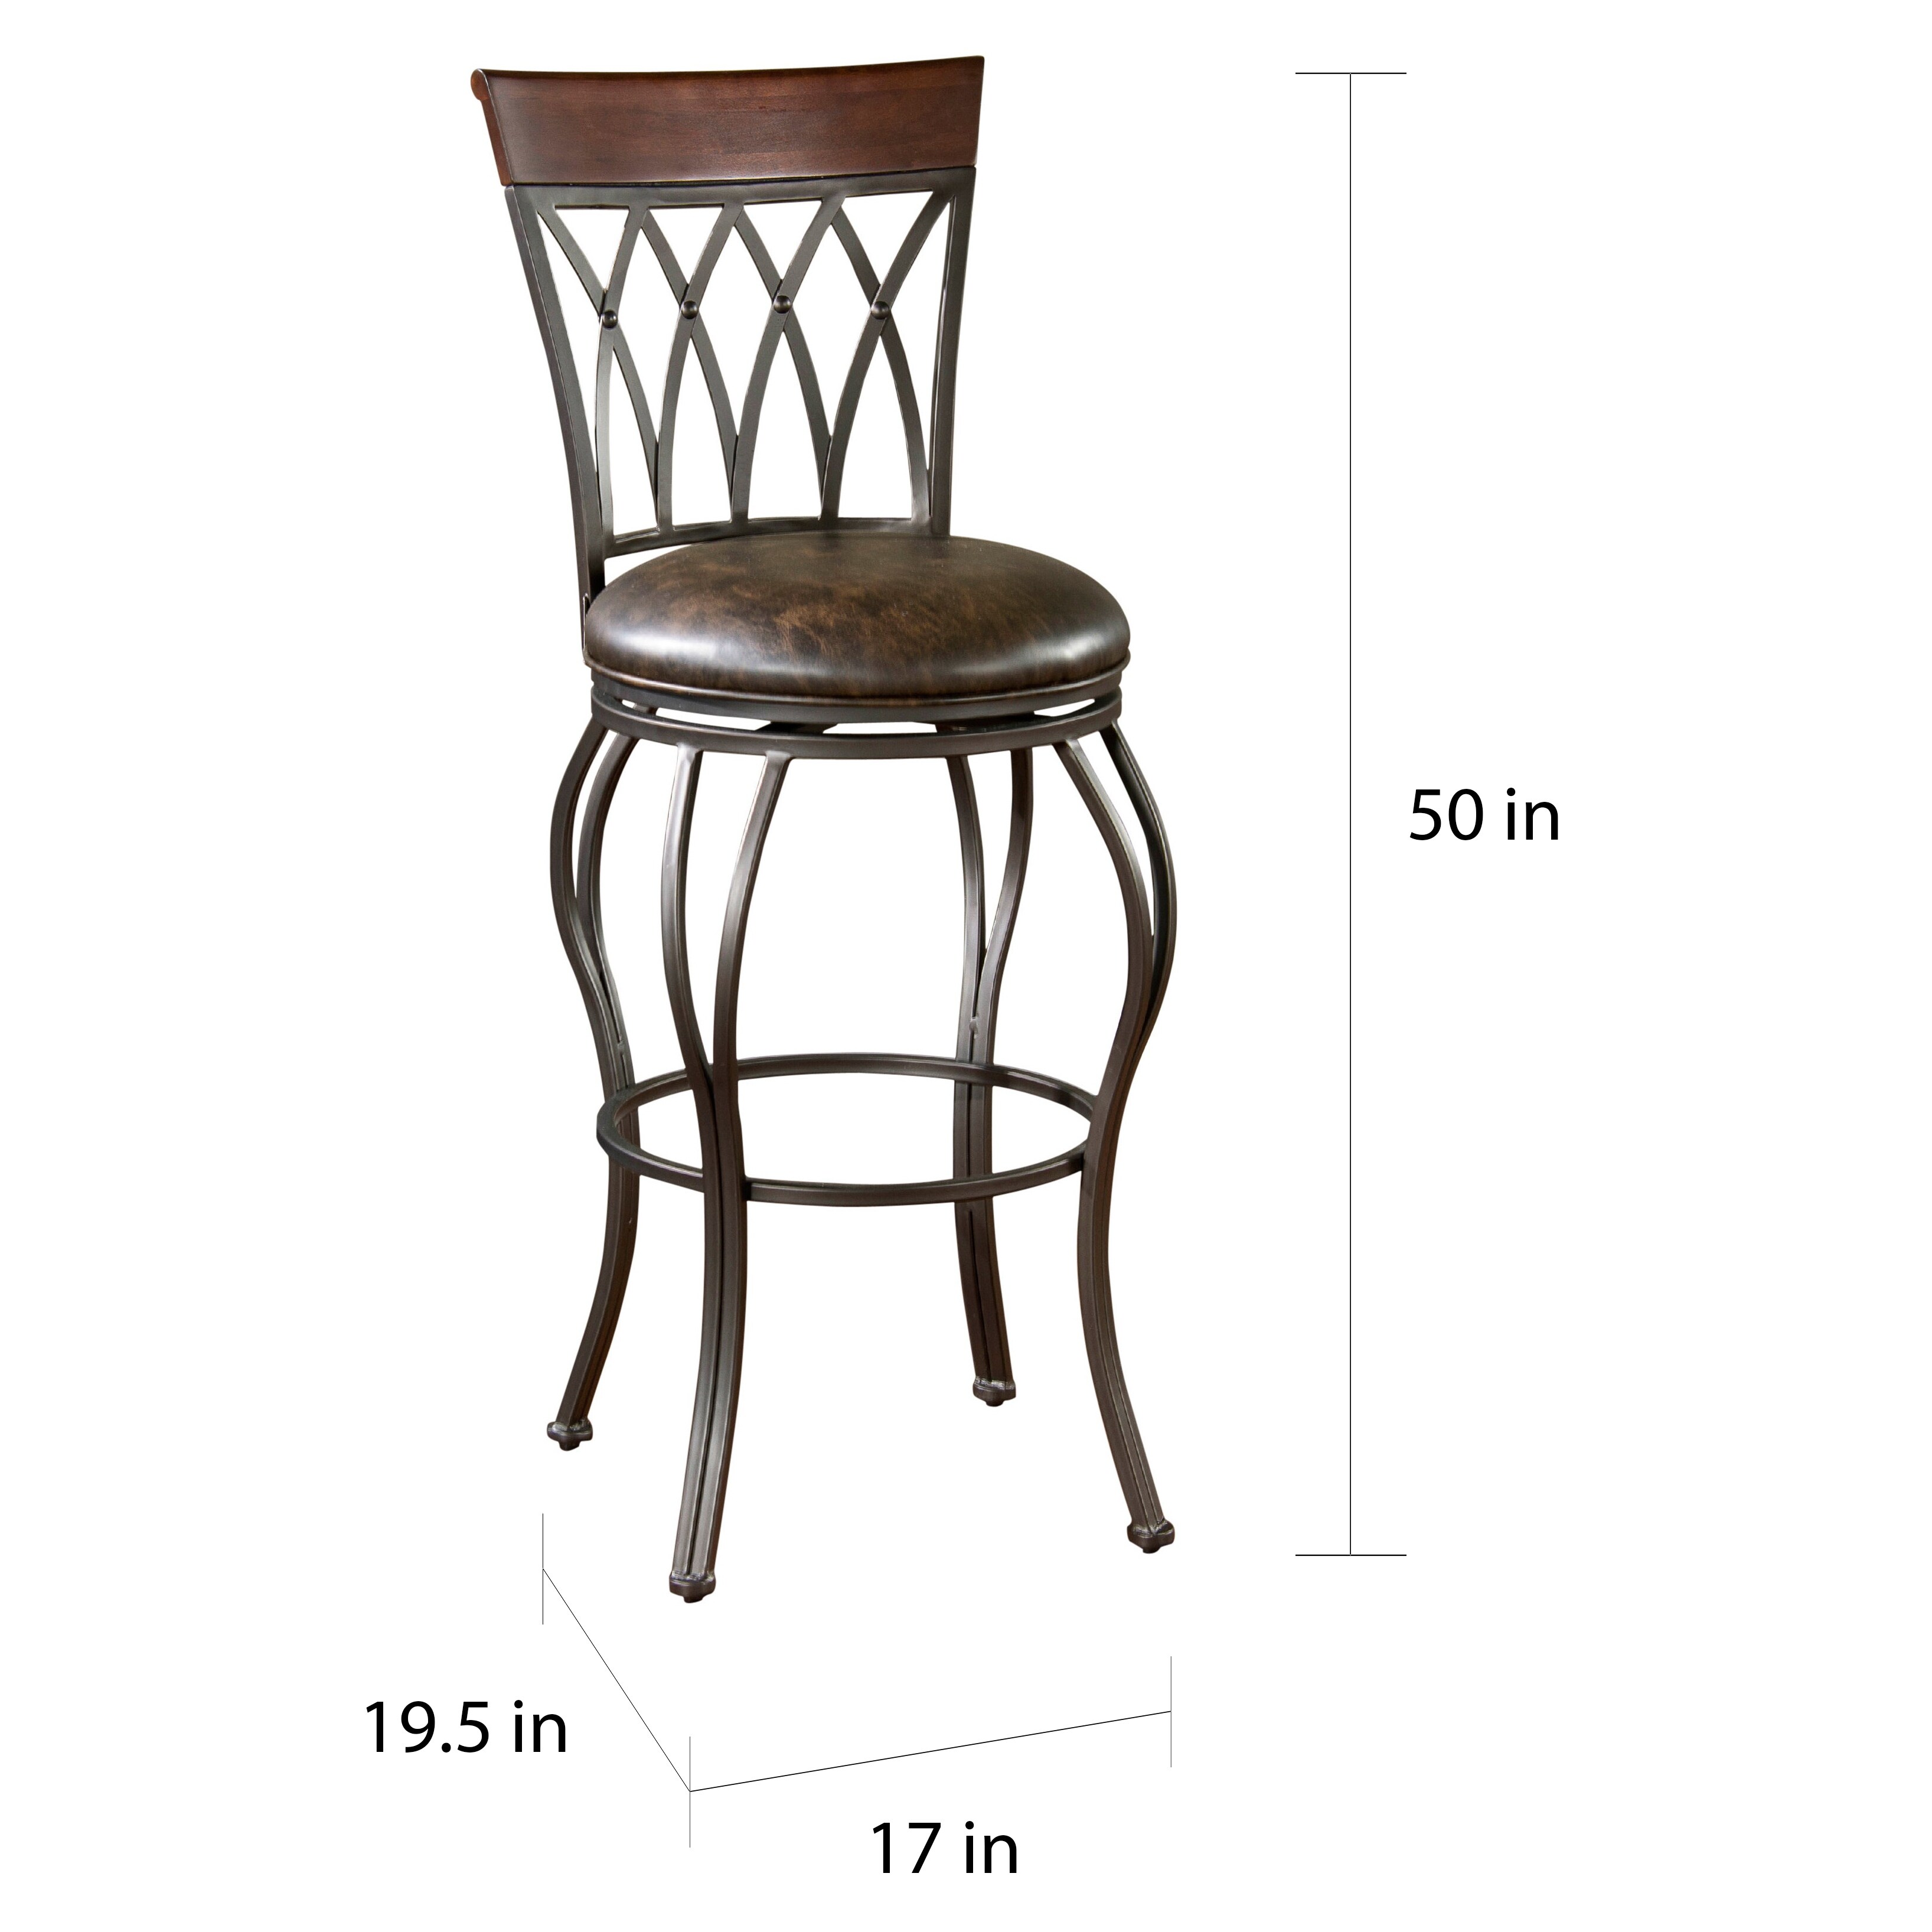 34 inch bar stool seat height